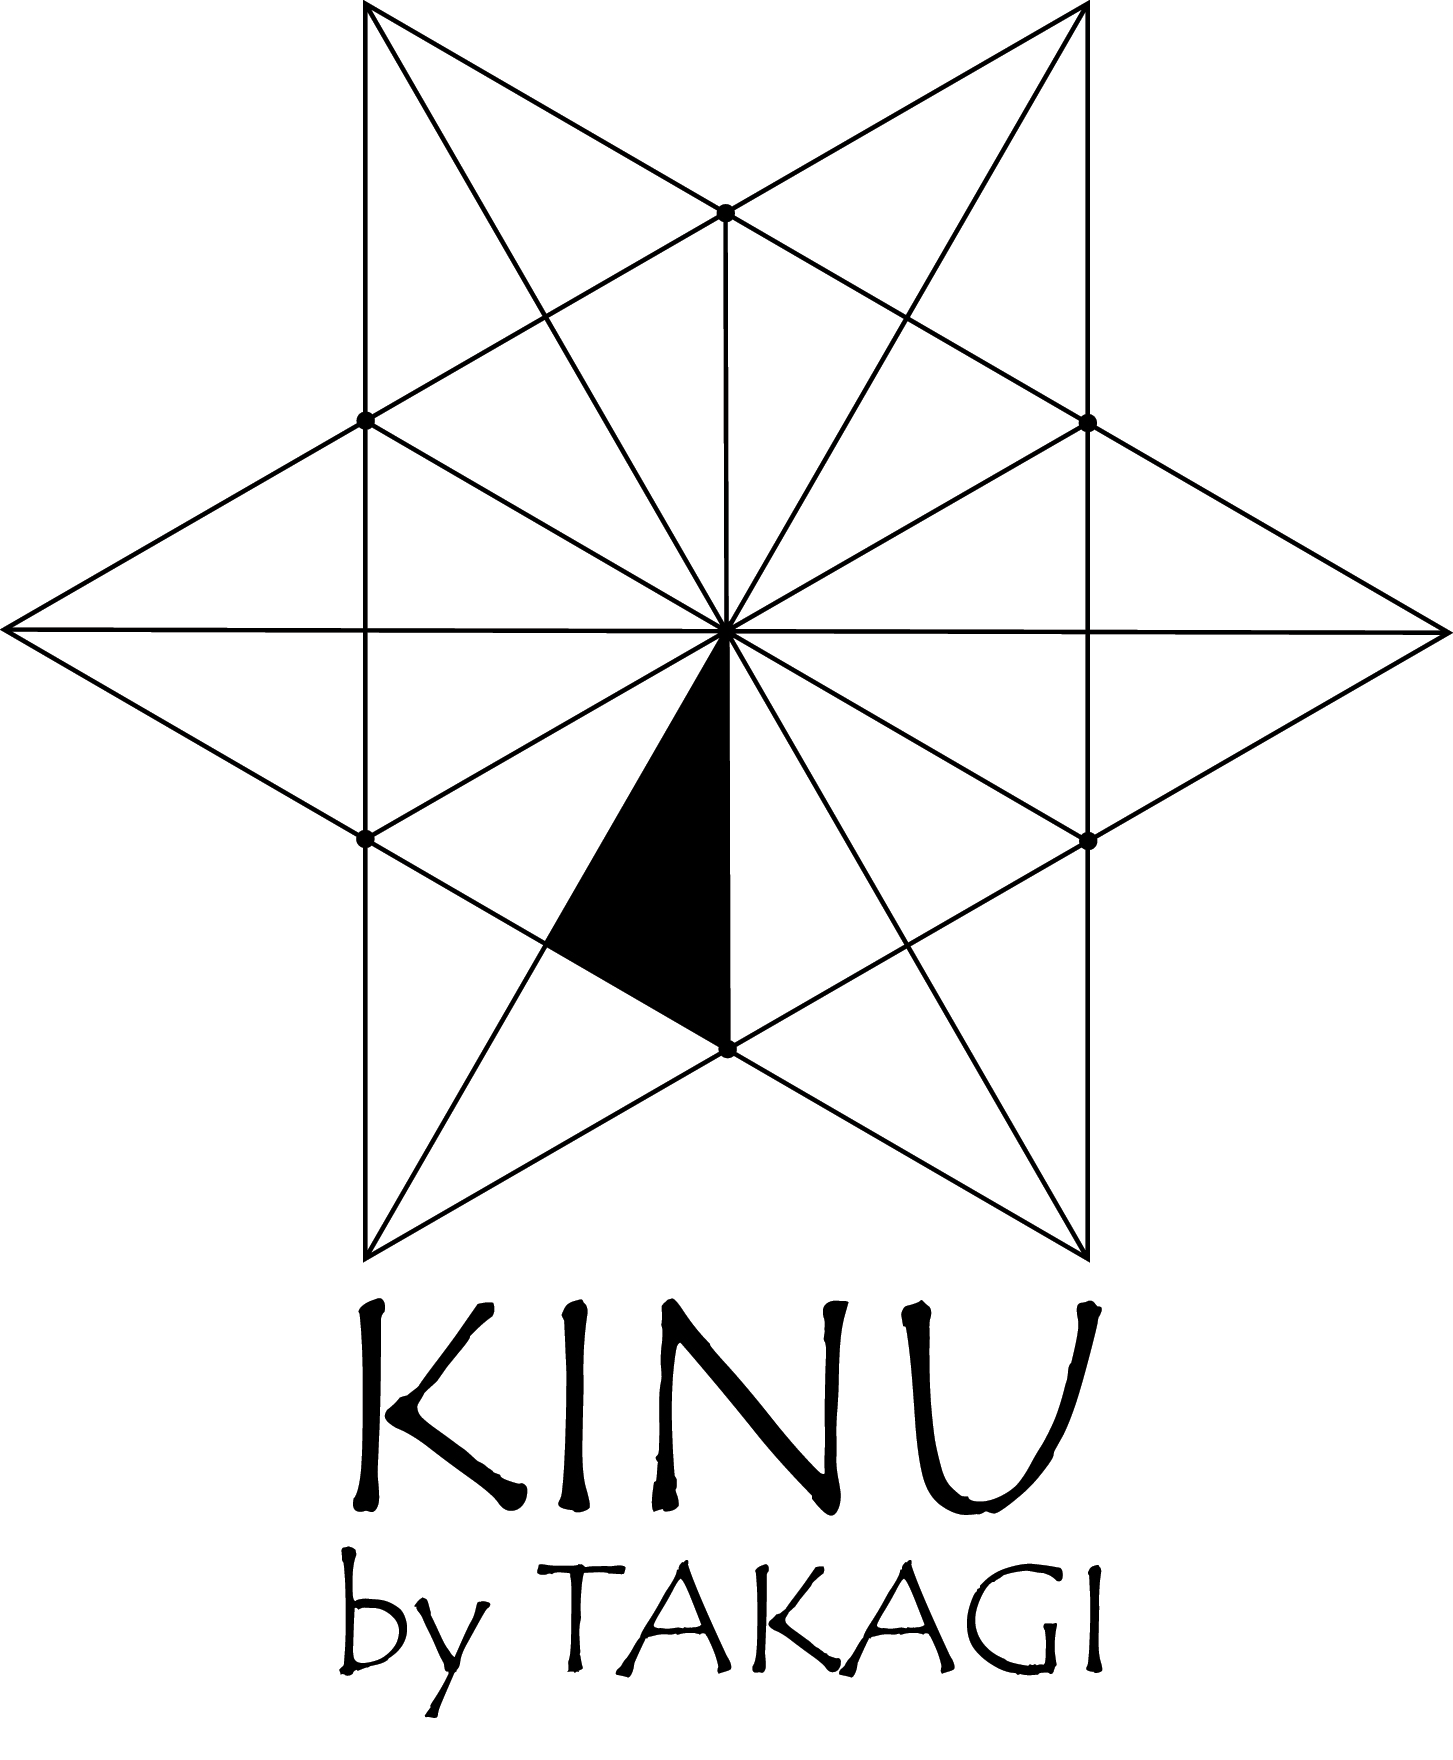 kinu by takagi logo